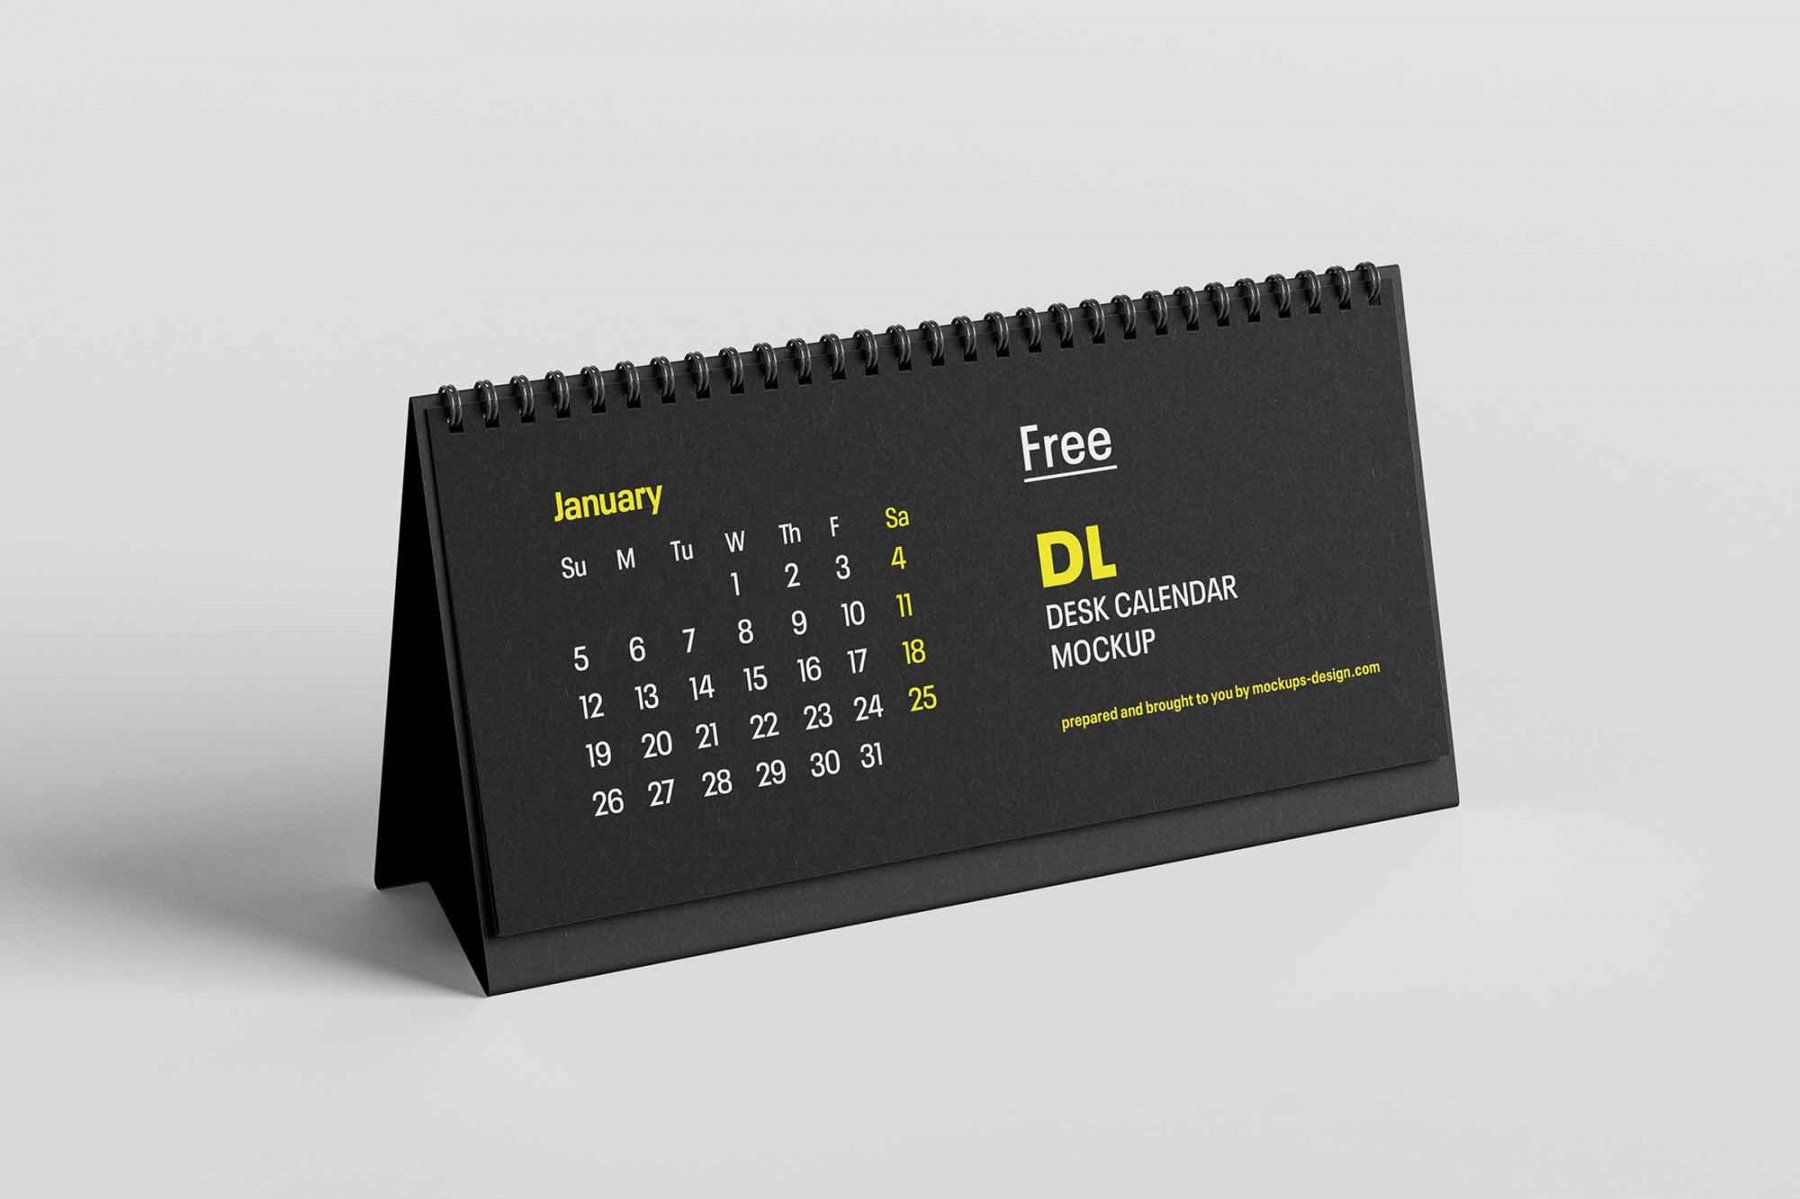 Free DL Desktop Calendar Mockup (PSD)